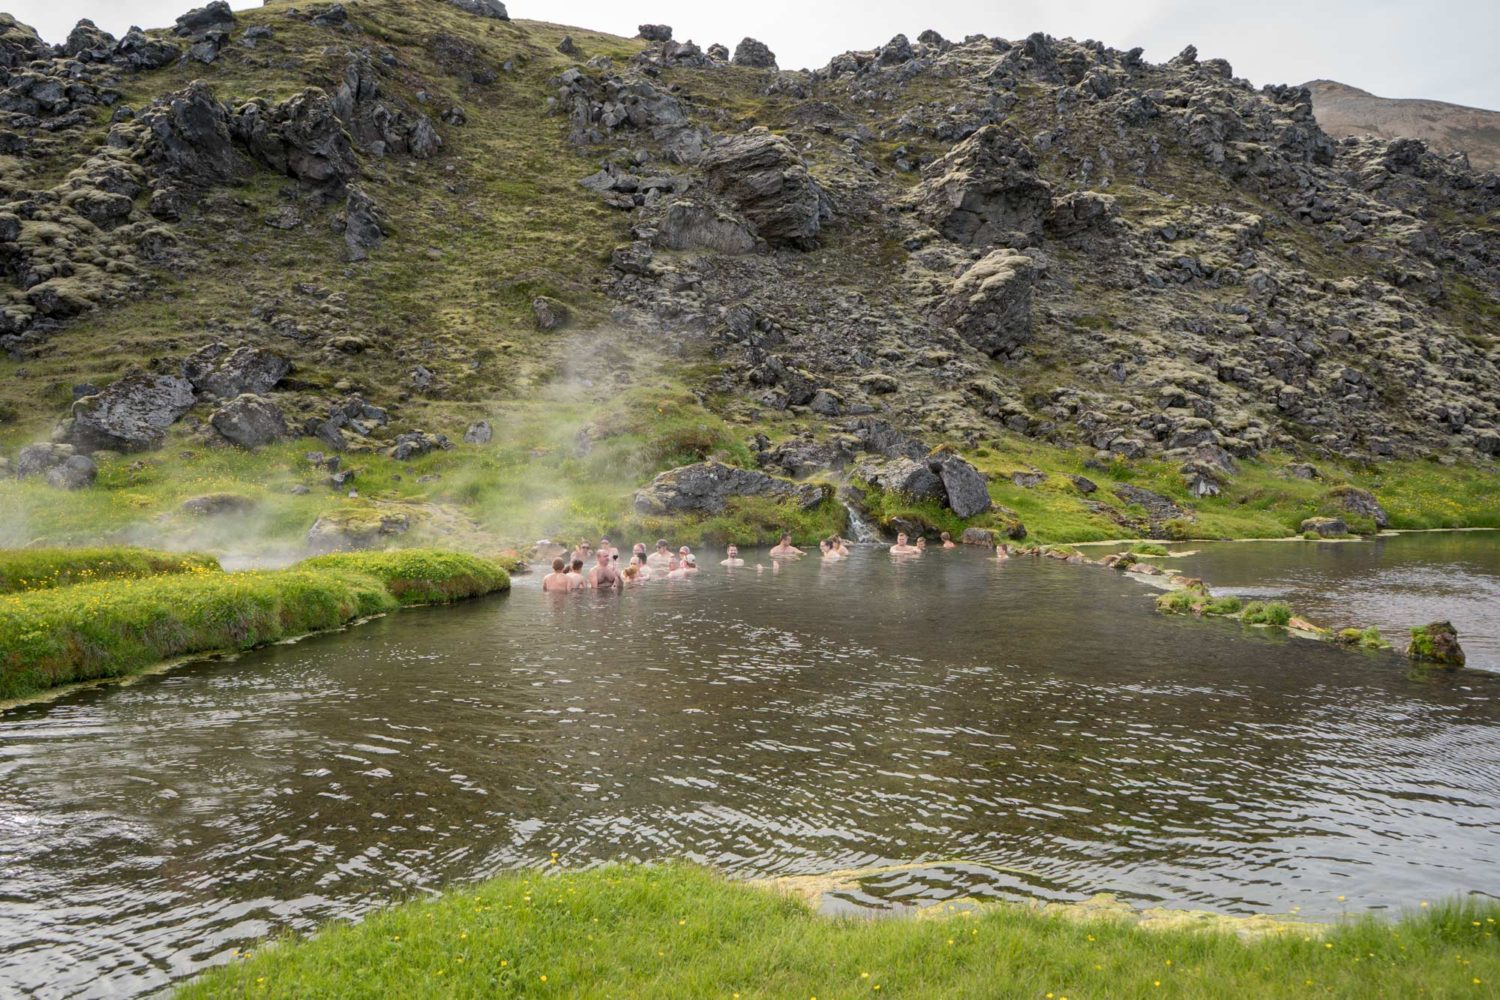 People bathing in the natural pool in Landmannalaugar